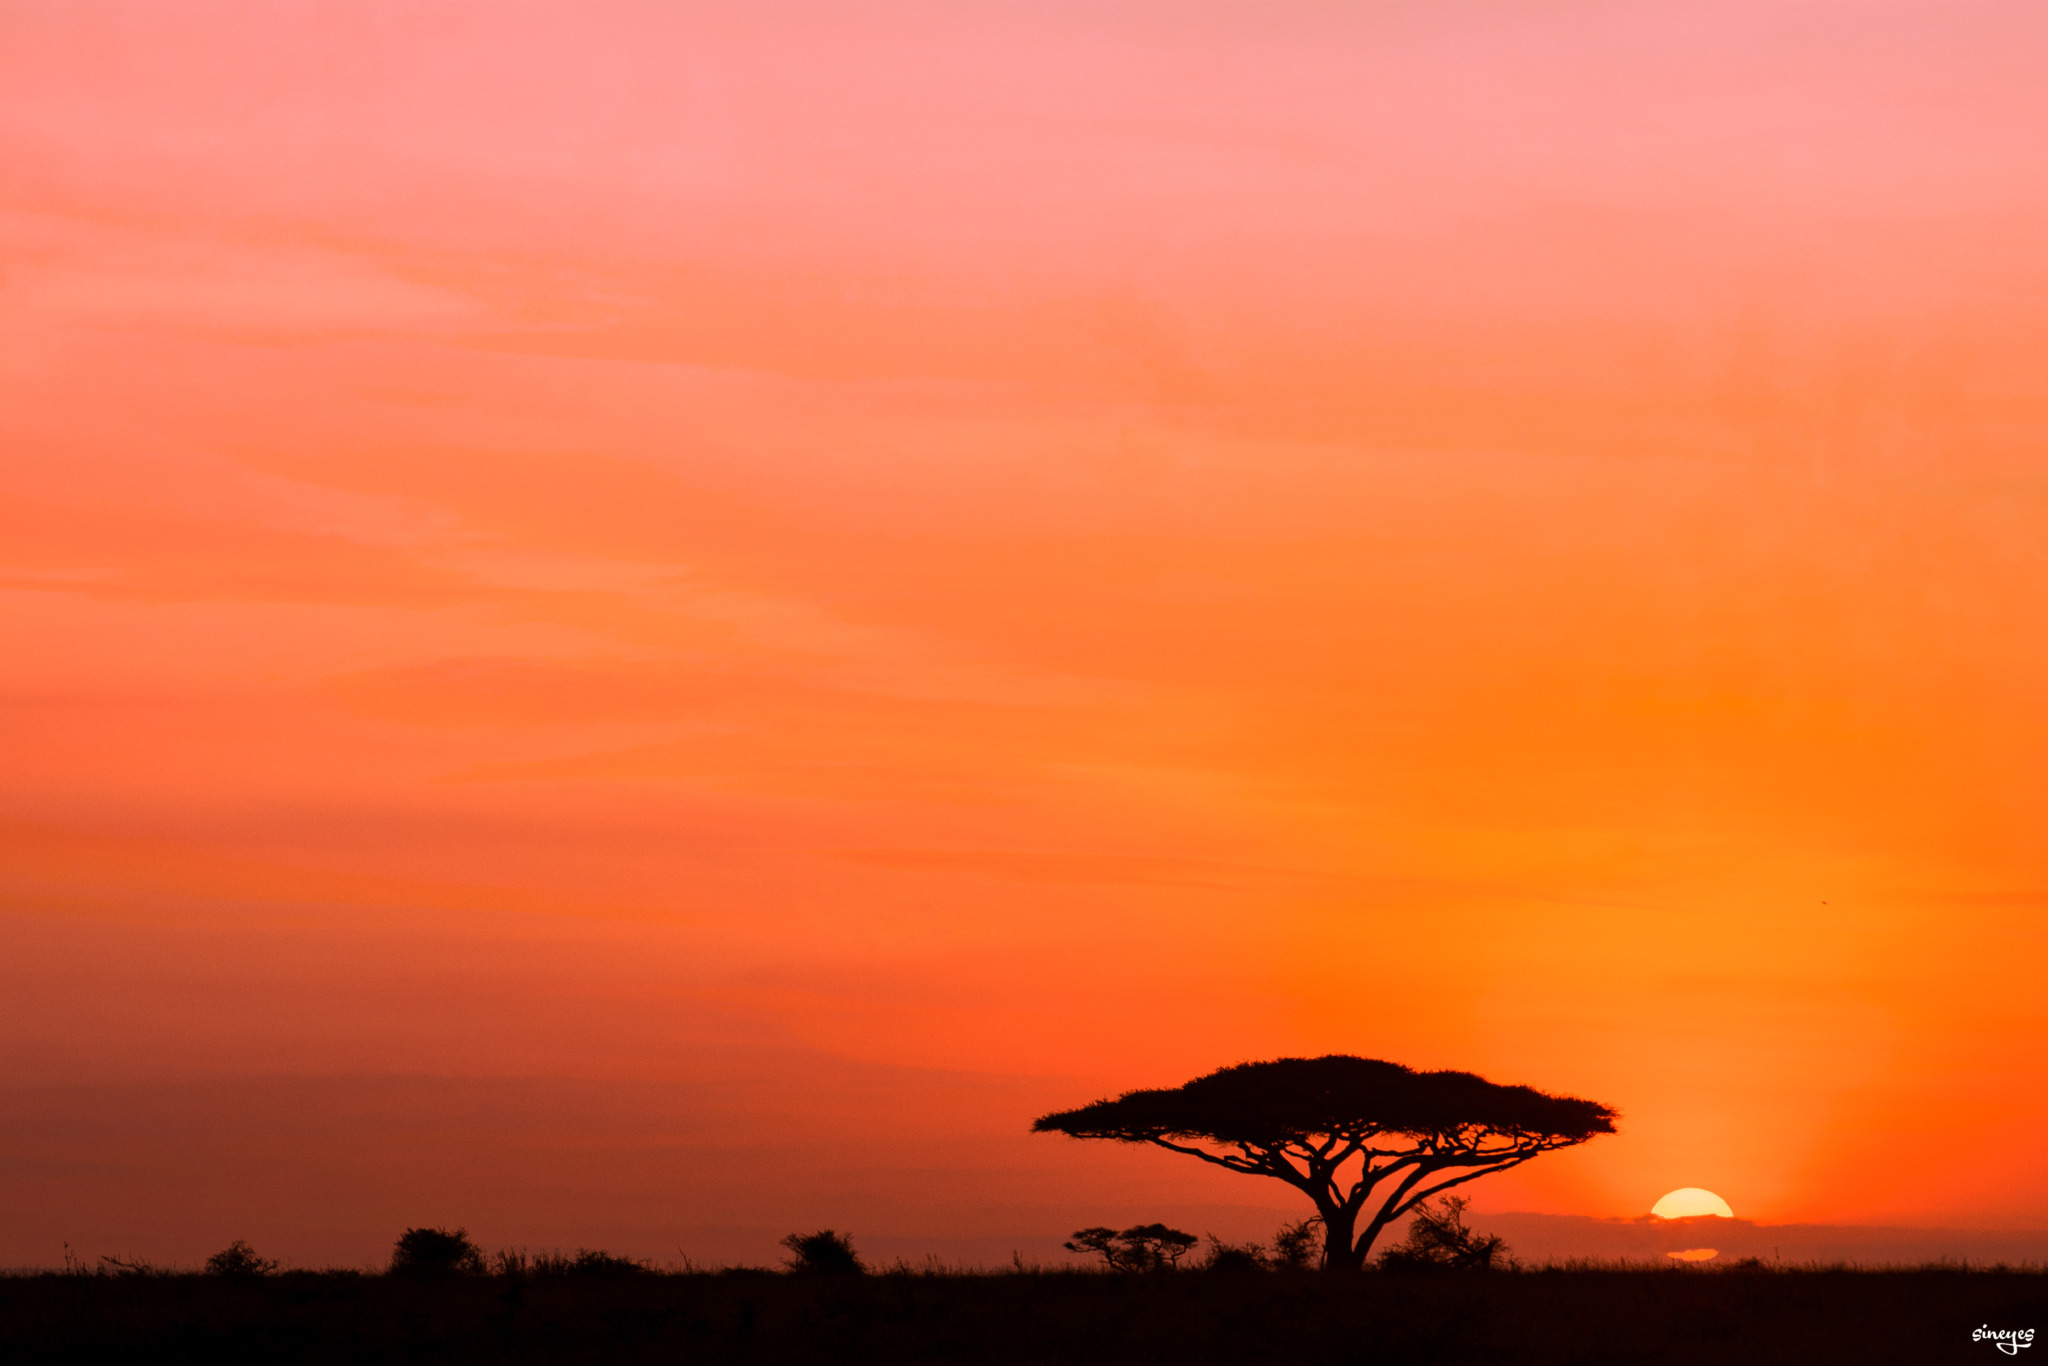 Serengeti sunset by sineyes